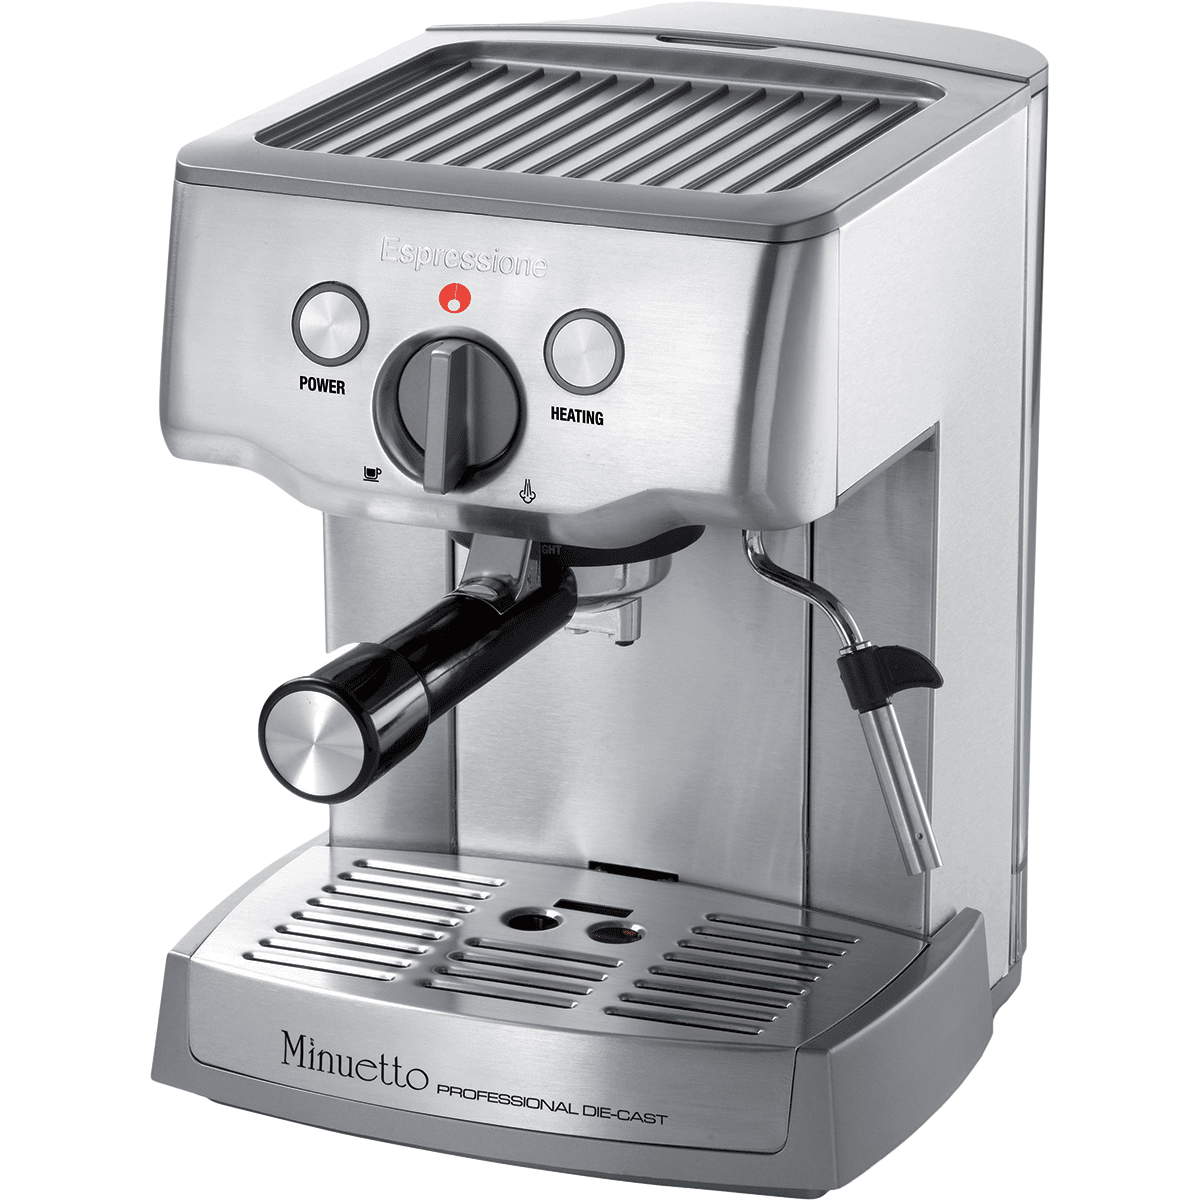 Espressione Cafe Minuetto Professional Die-cast Espresso Machine (1324)